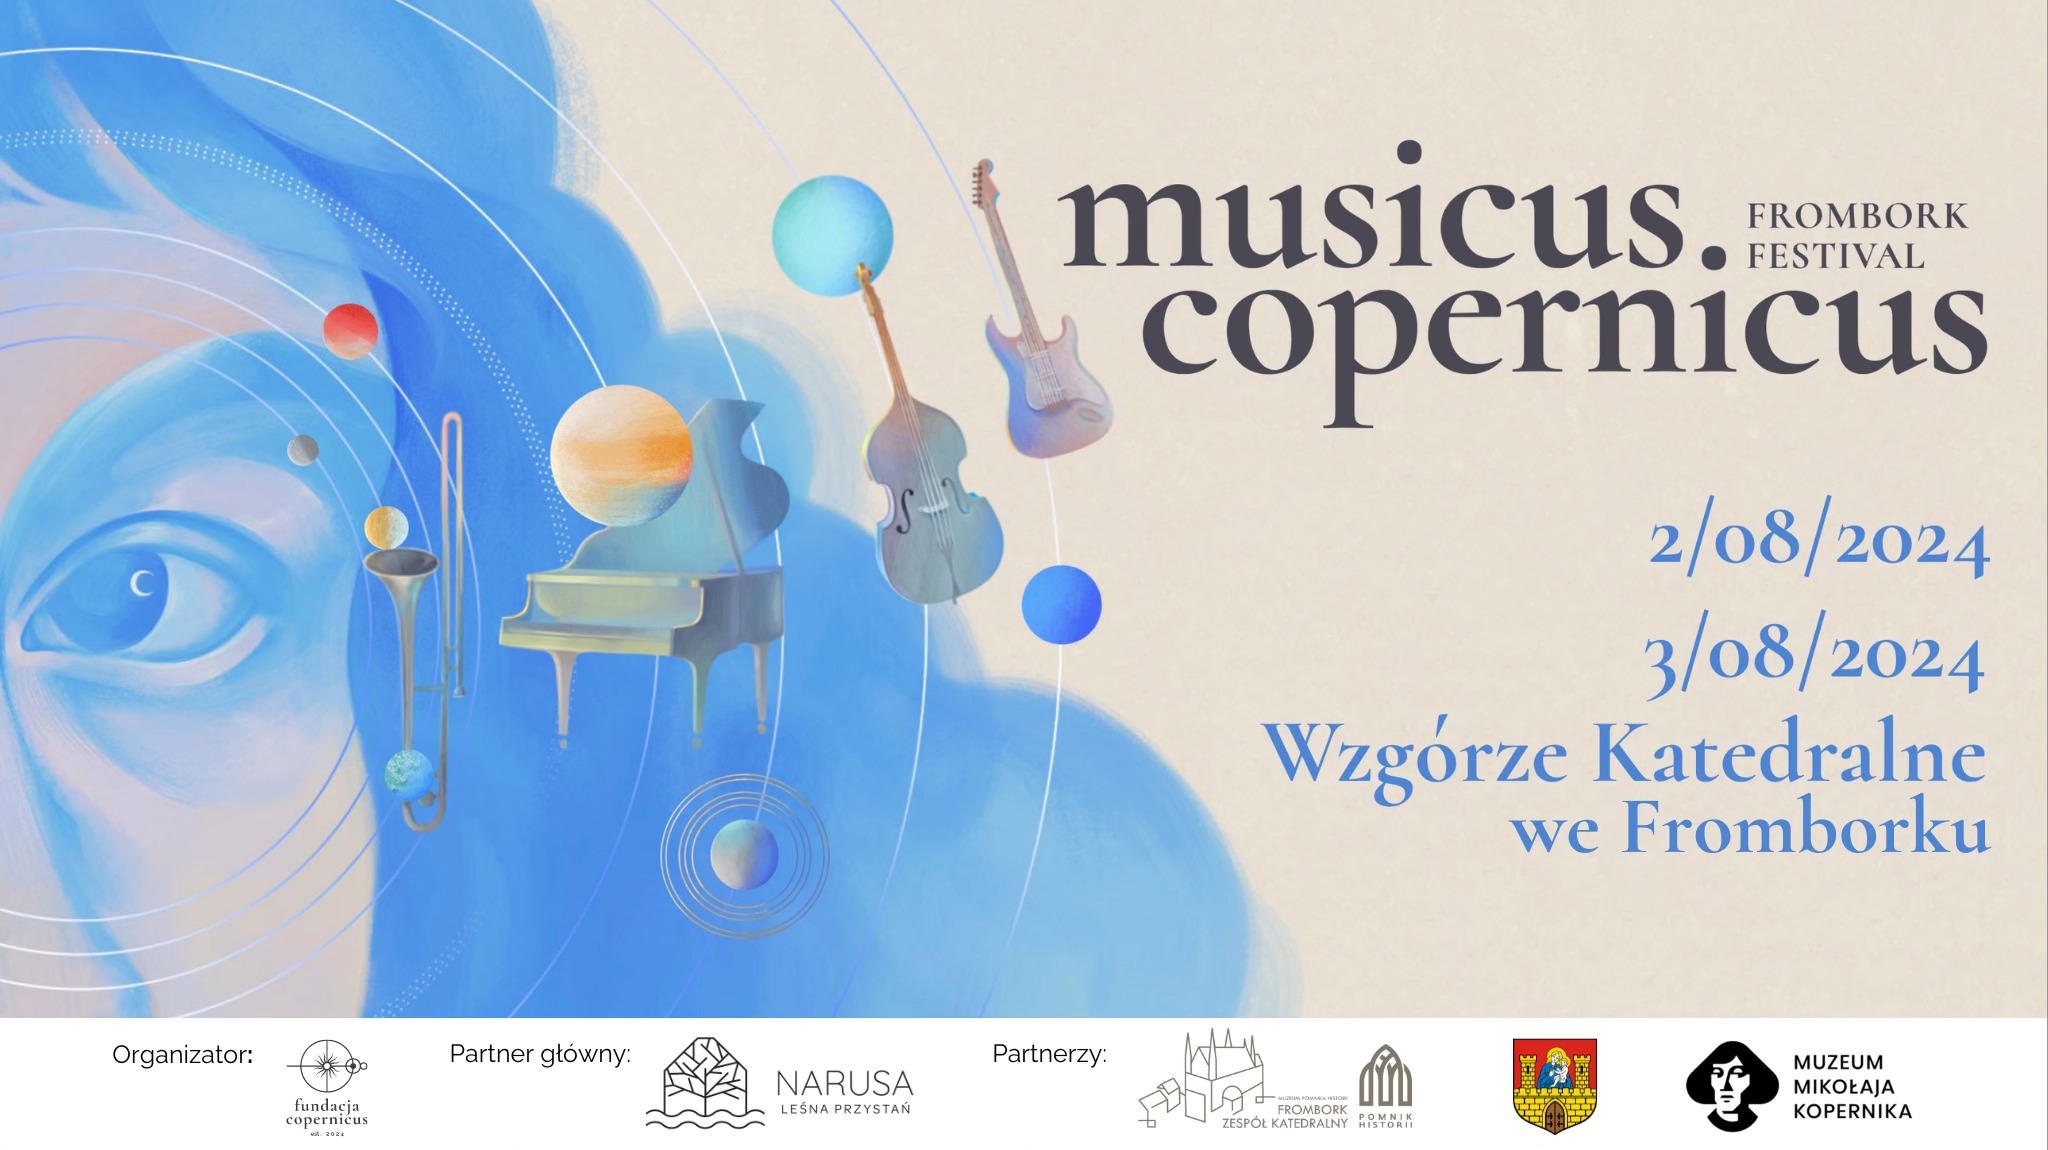 Musicus copernicus Frombork Festival 2-3 sierpnia 2024